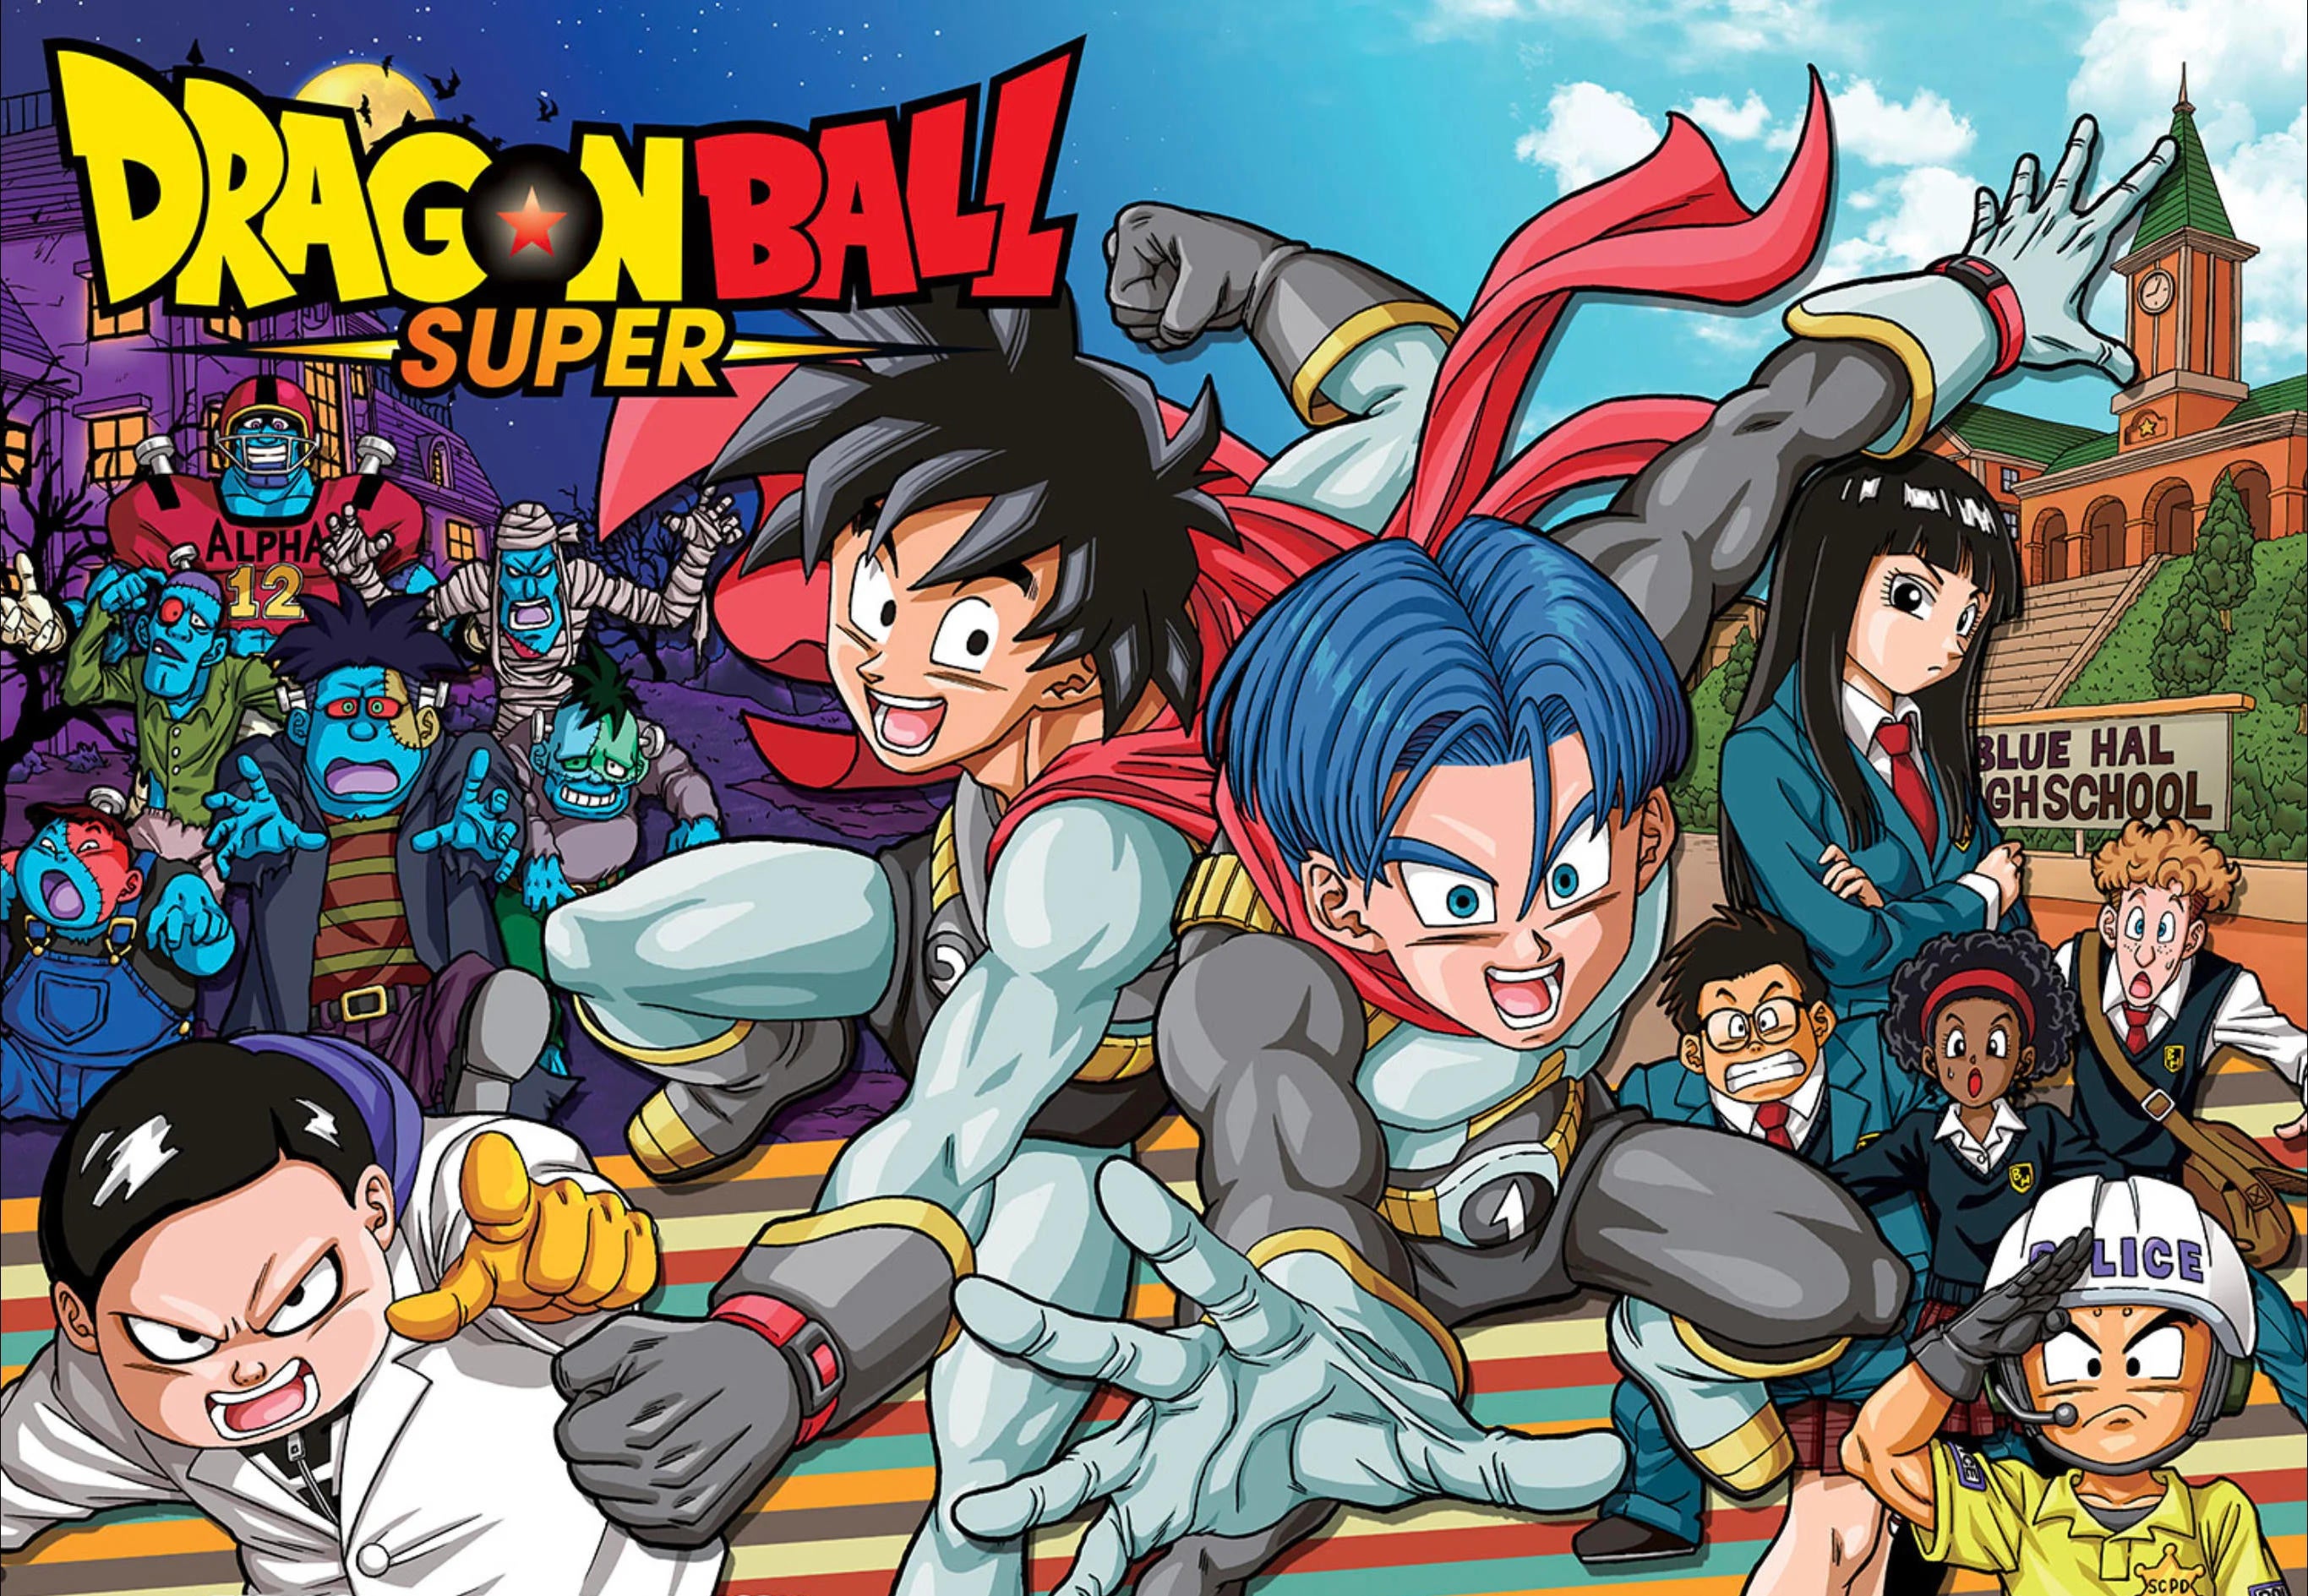 Dragon Ball Super Reveals The True Inspiration Behind Super Hero's